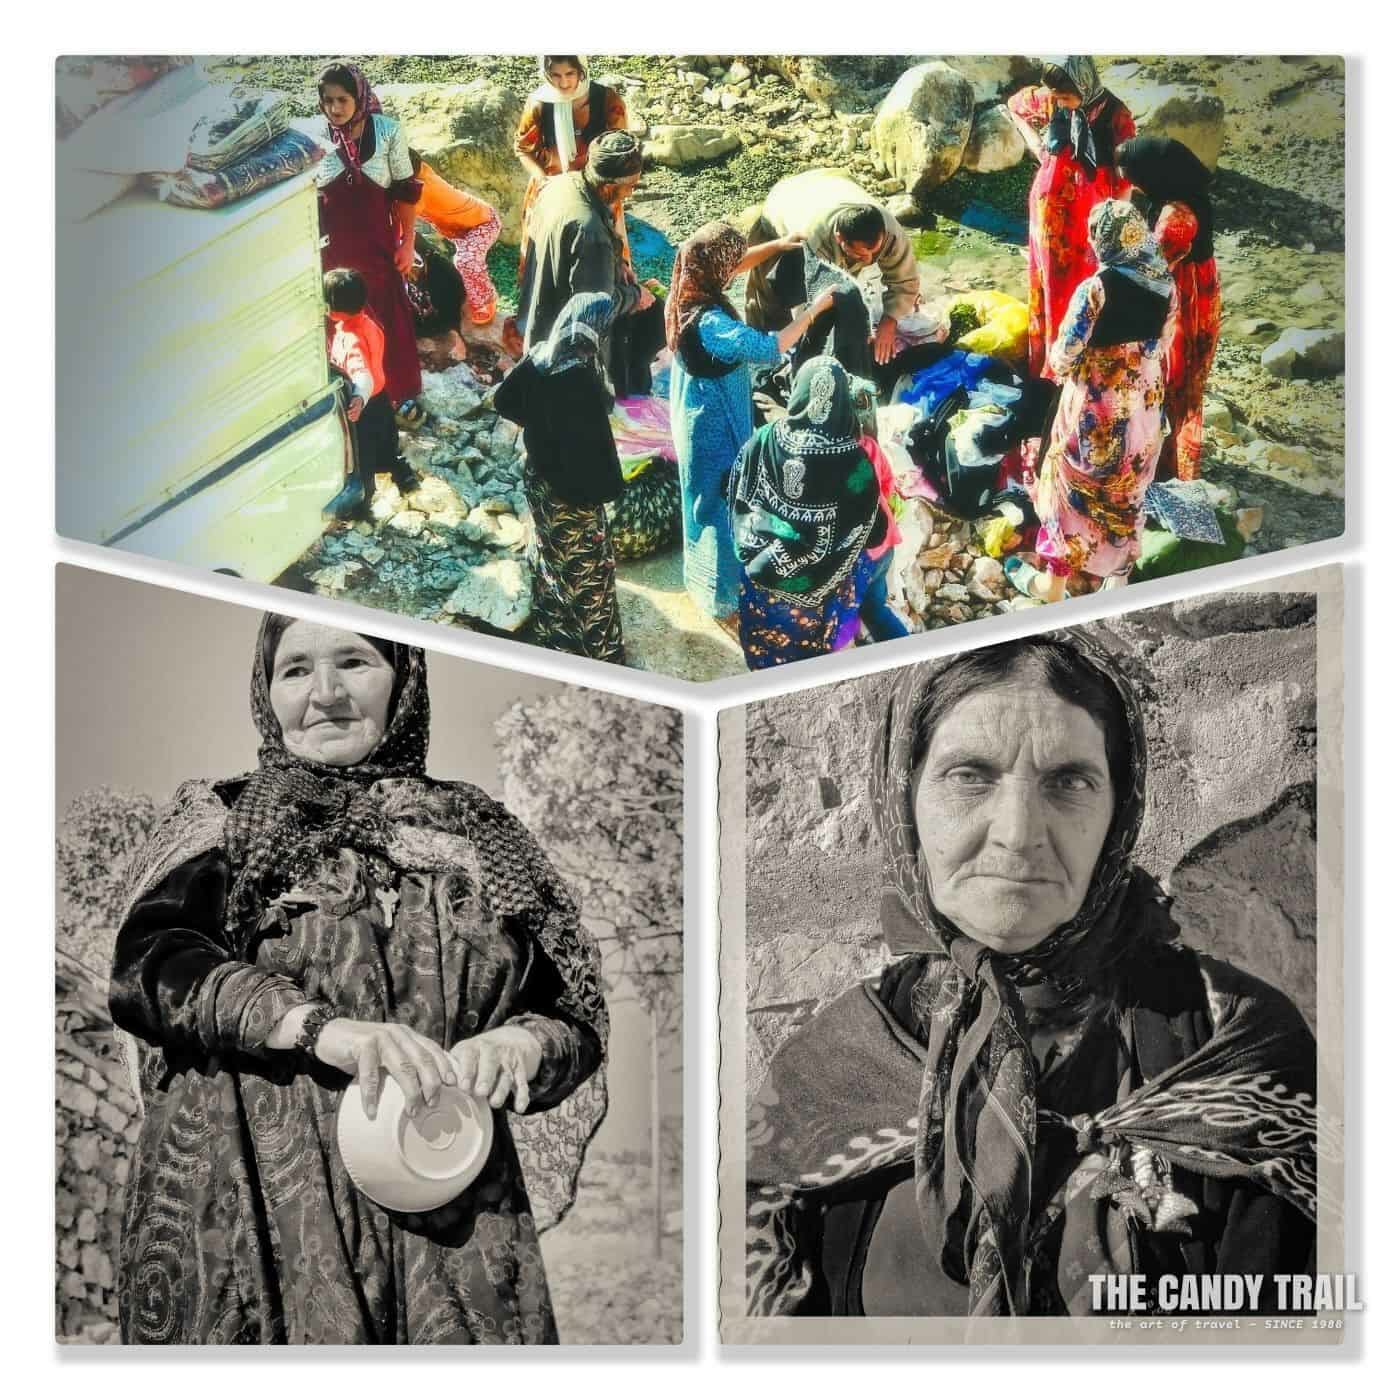 Kurdish Women buying clothes in Palangan village in Iran